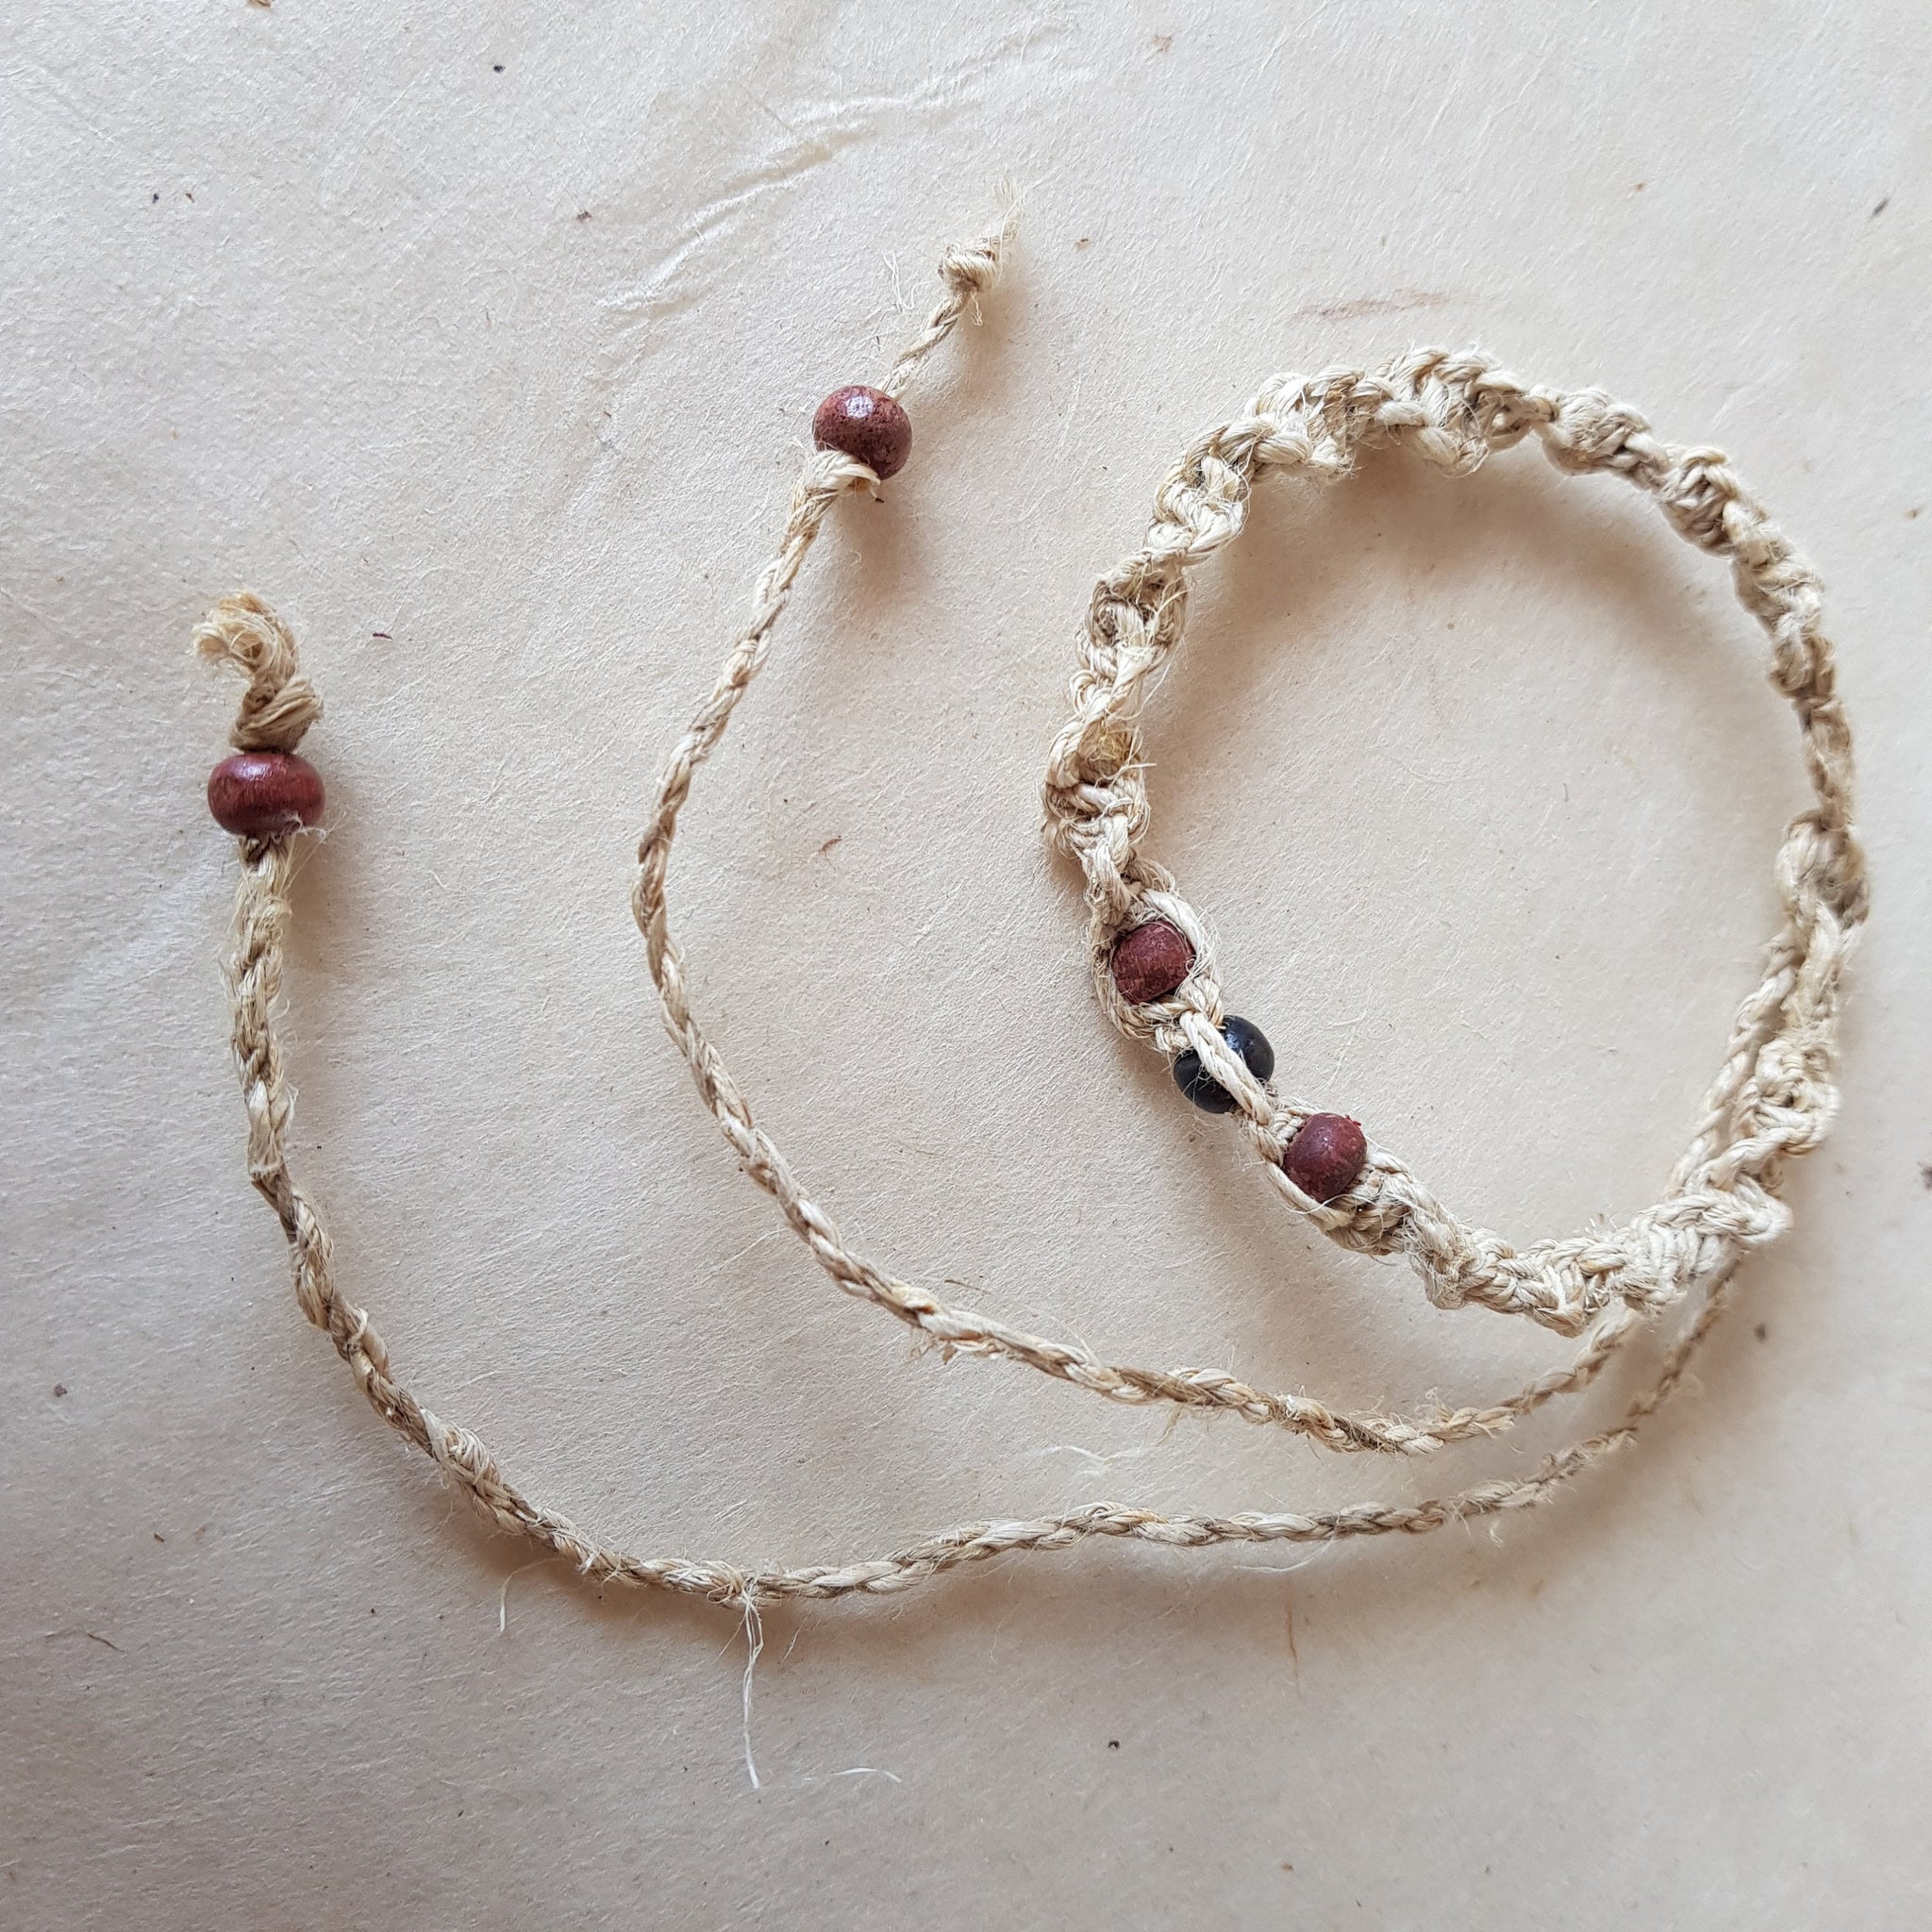 Natural Hemp Twisted Cord bracelet; 3 wooden beads